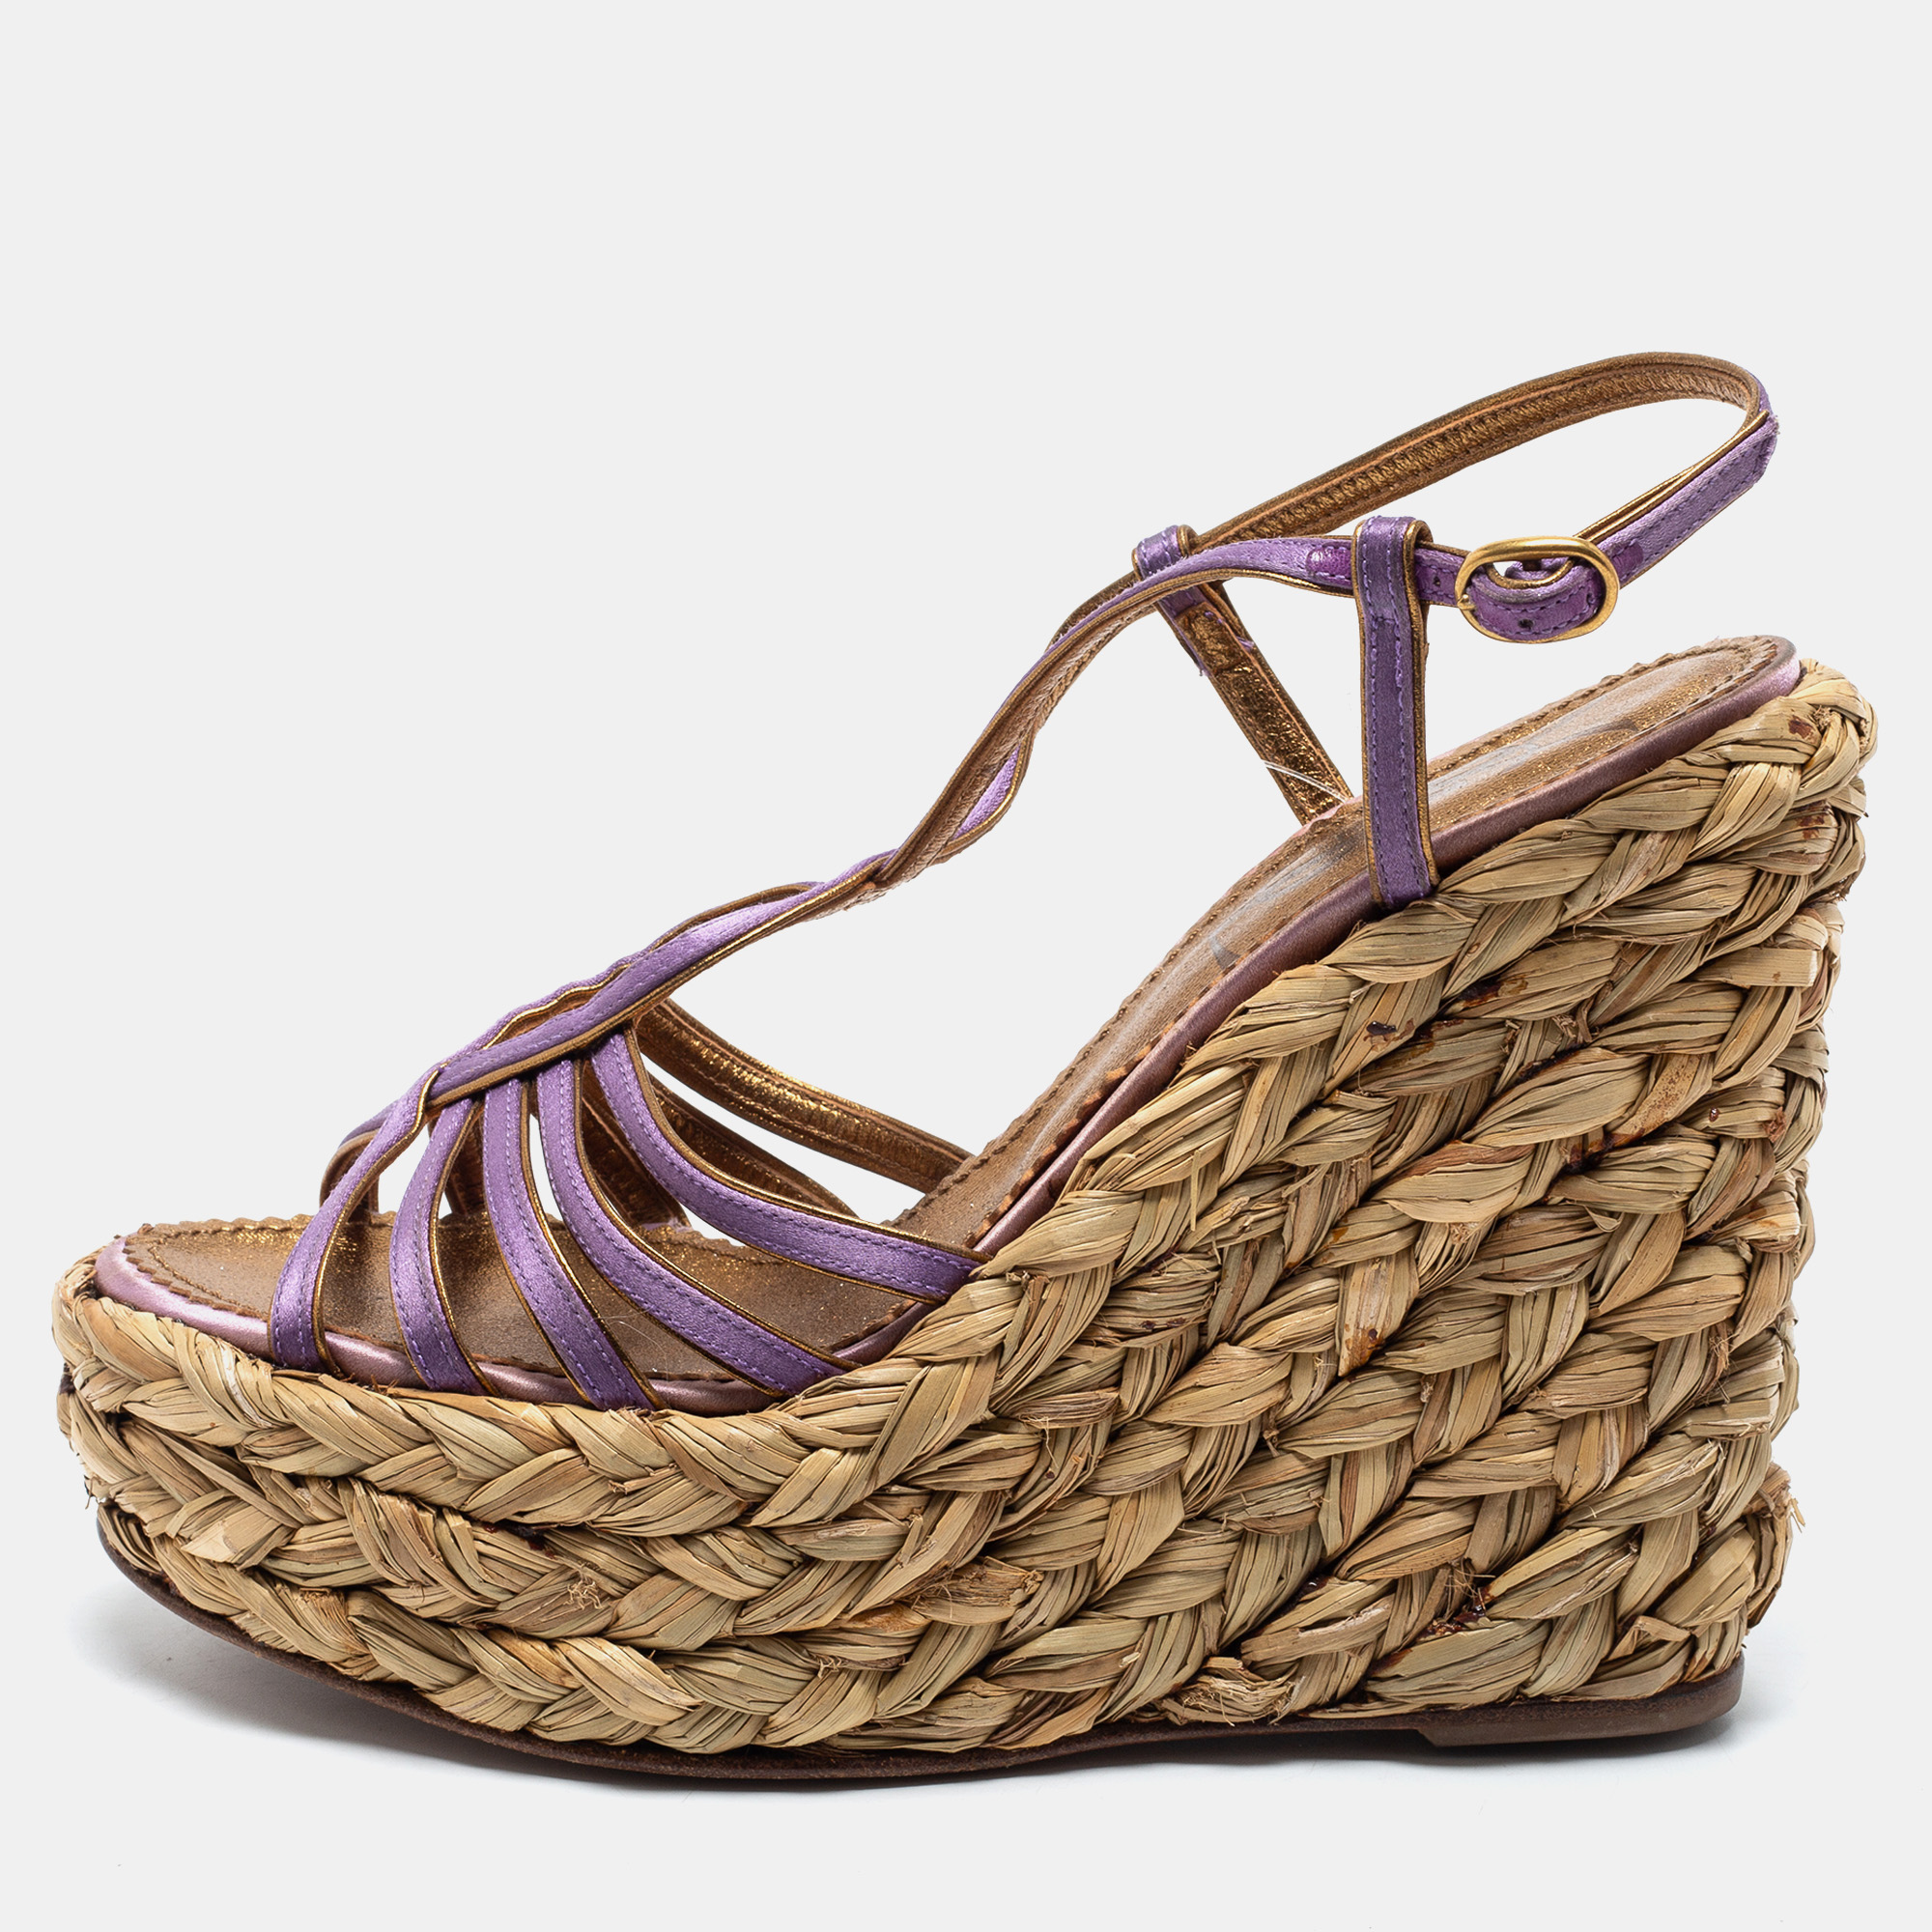 Yves saint laurent purple satin woven straw platform wedge sandals size 35